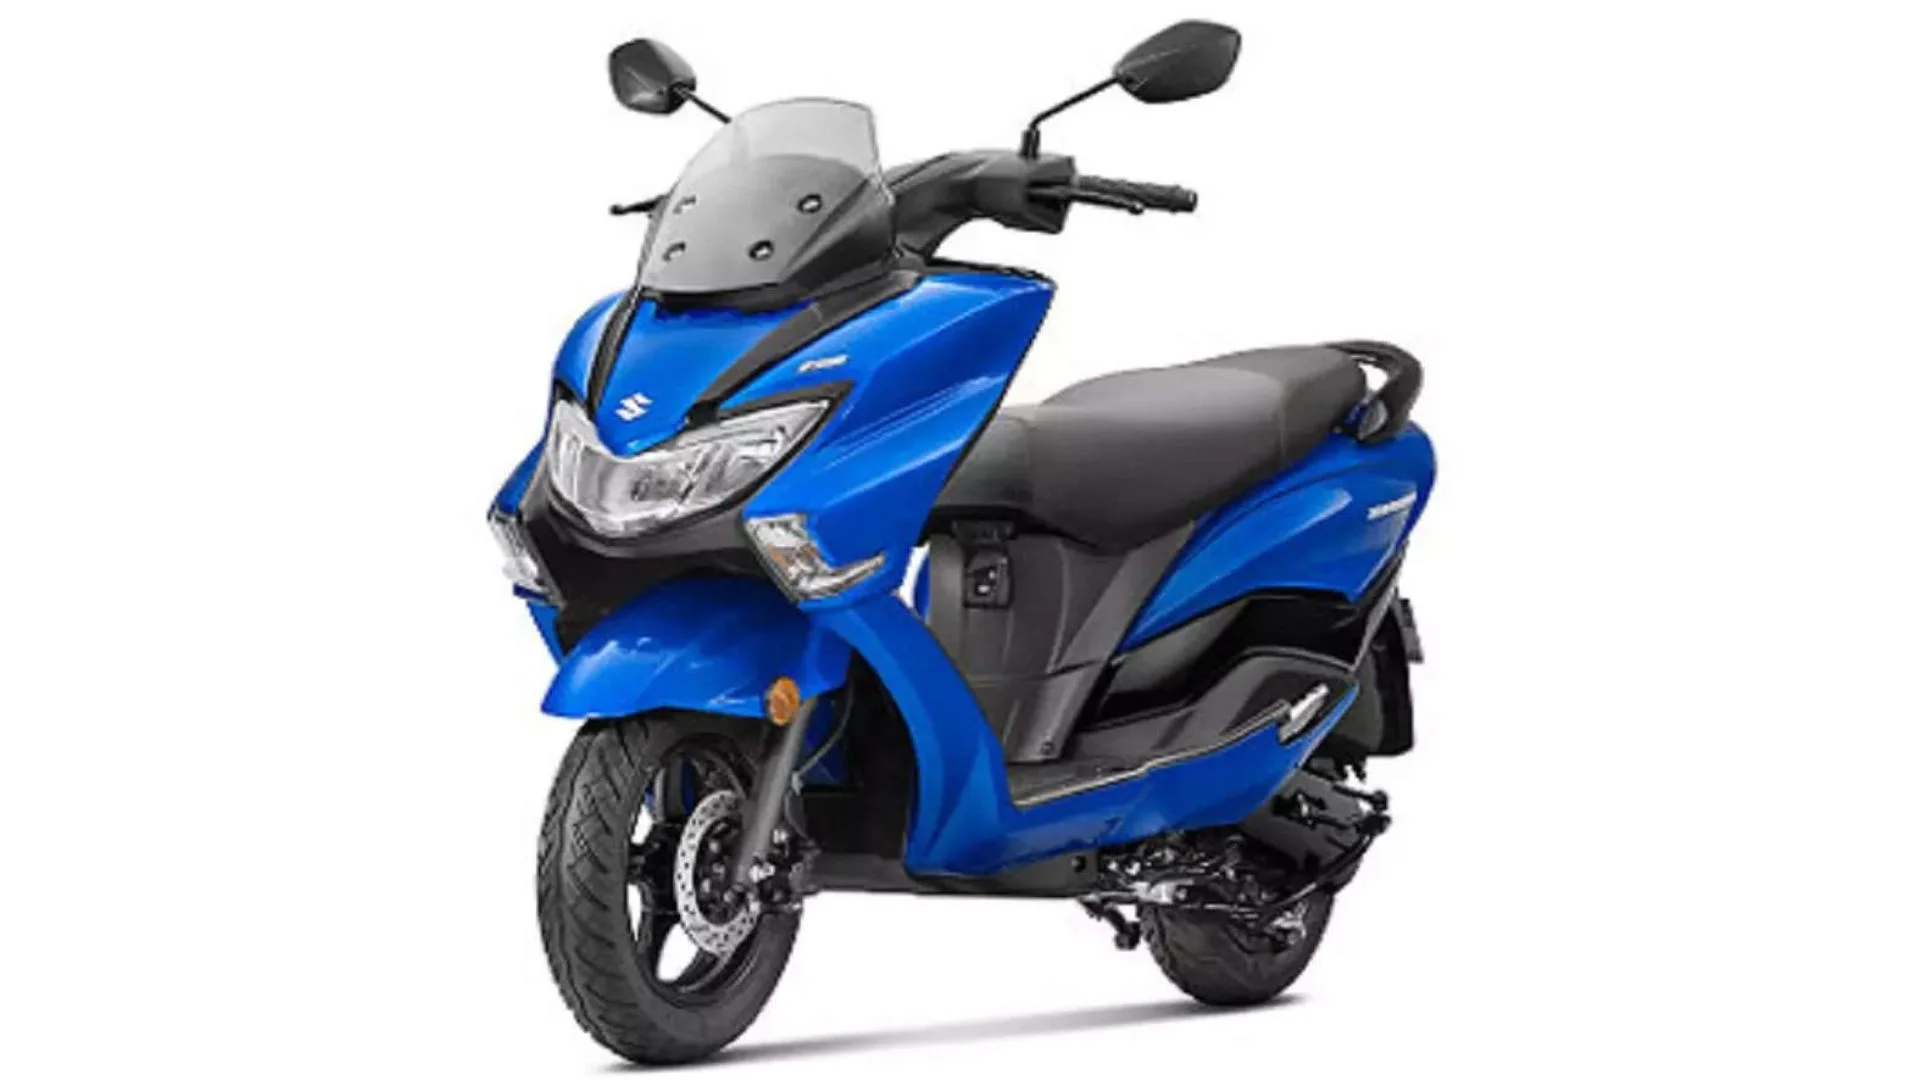 Suzuki Burgman Electric scooter price